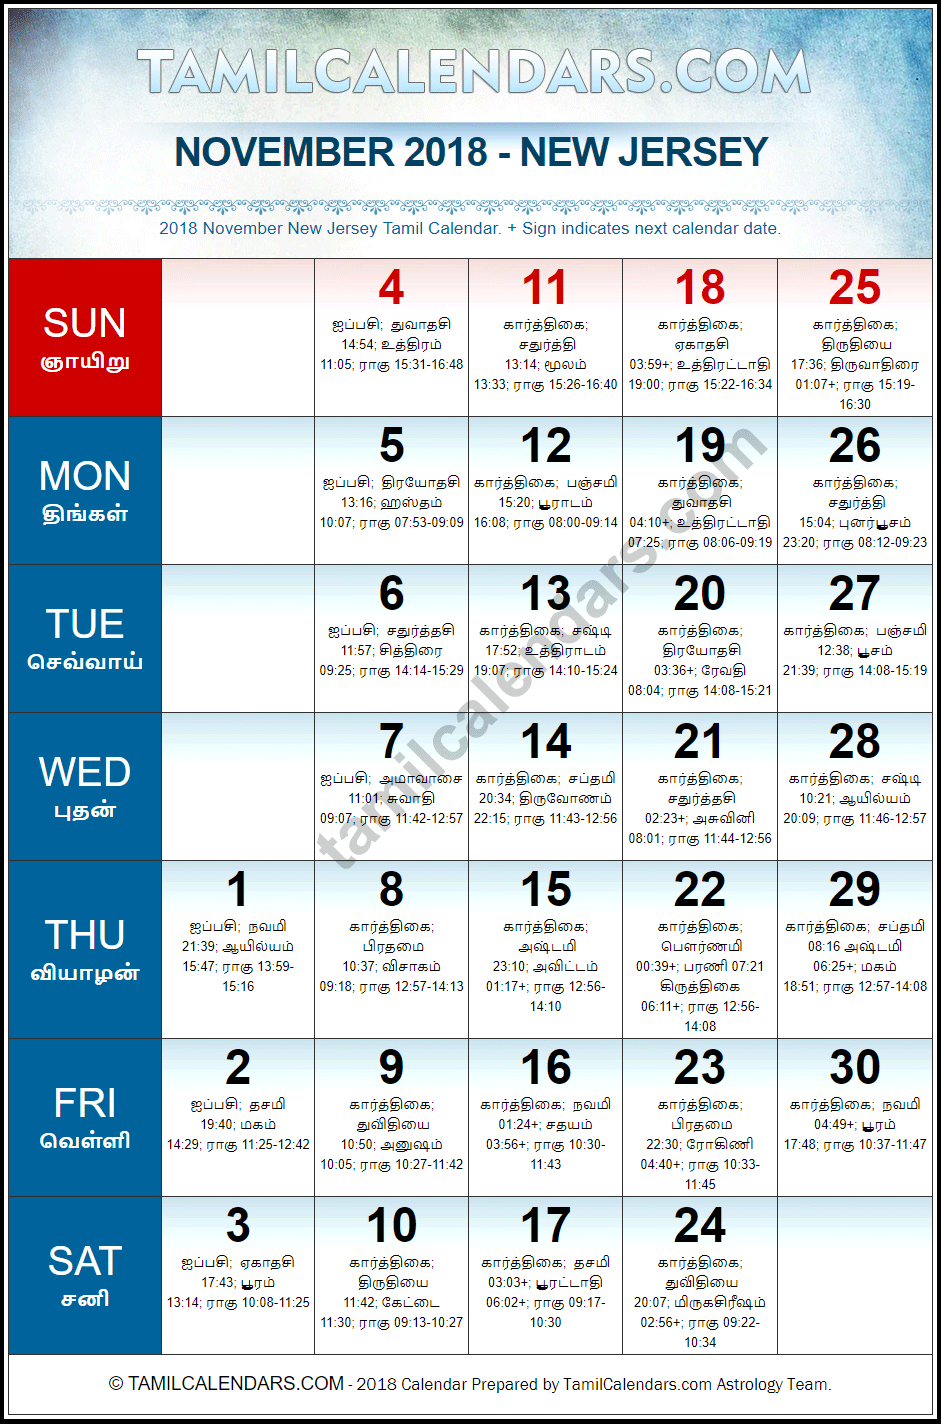 November 2018 Tamil Calendar for New Jersey, USA